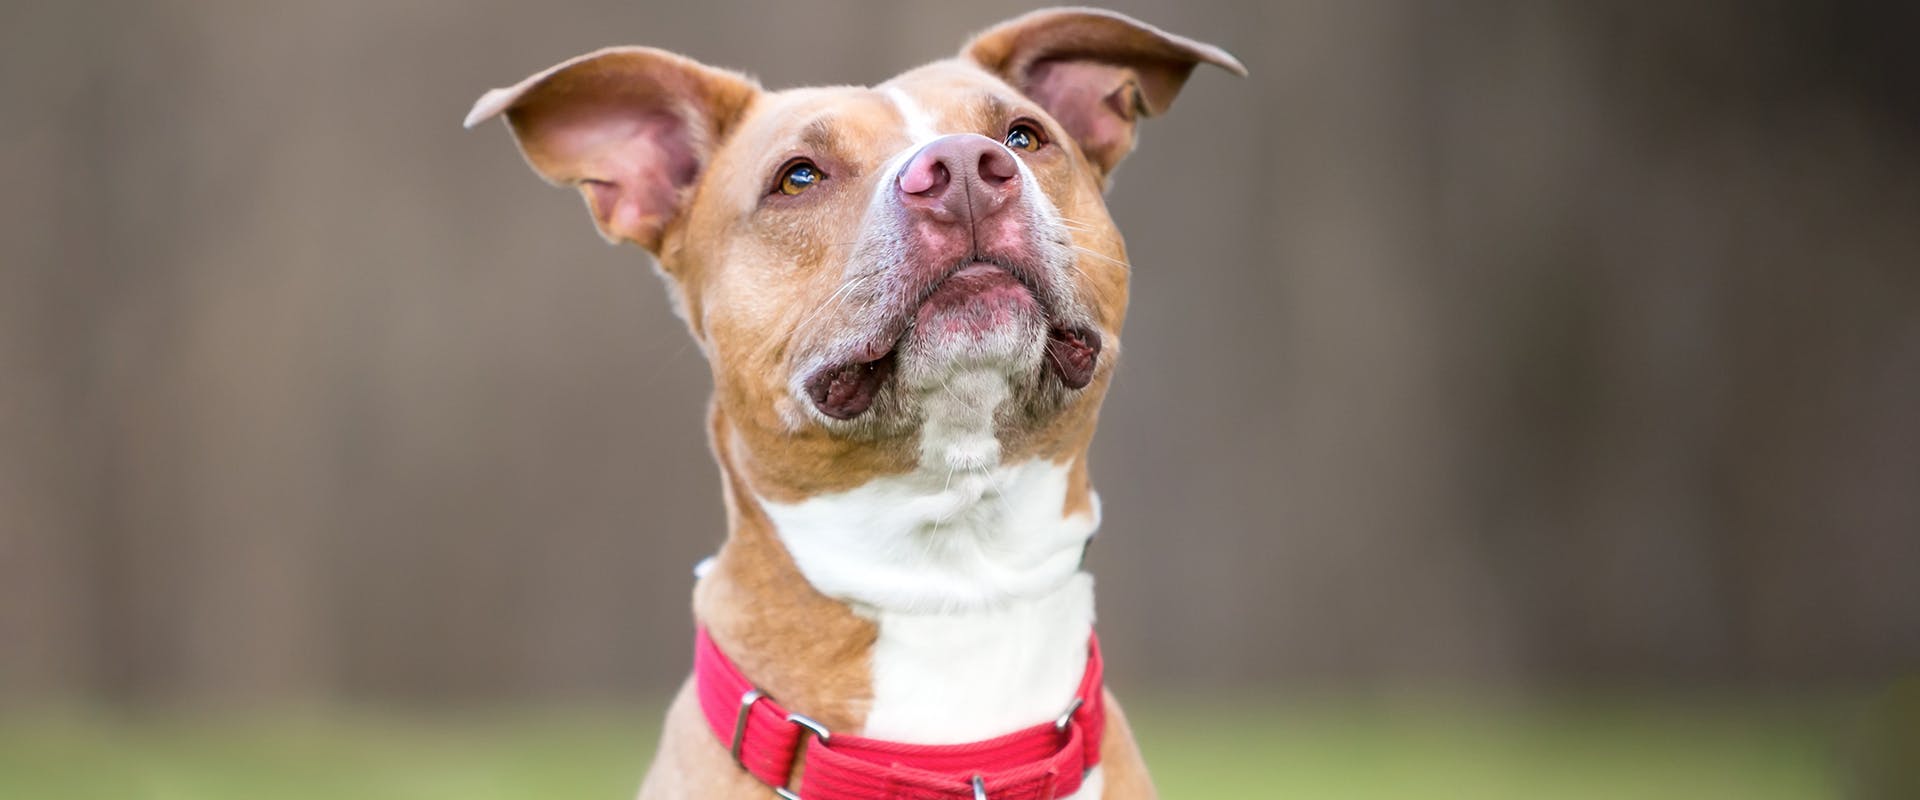 A dog wearing a martingale dog collar